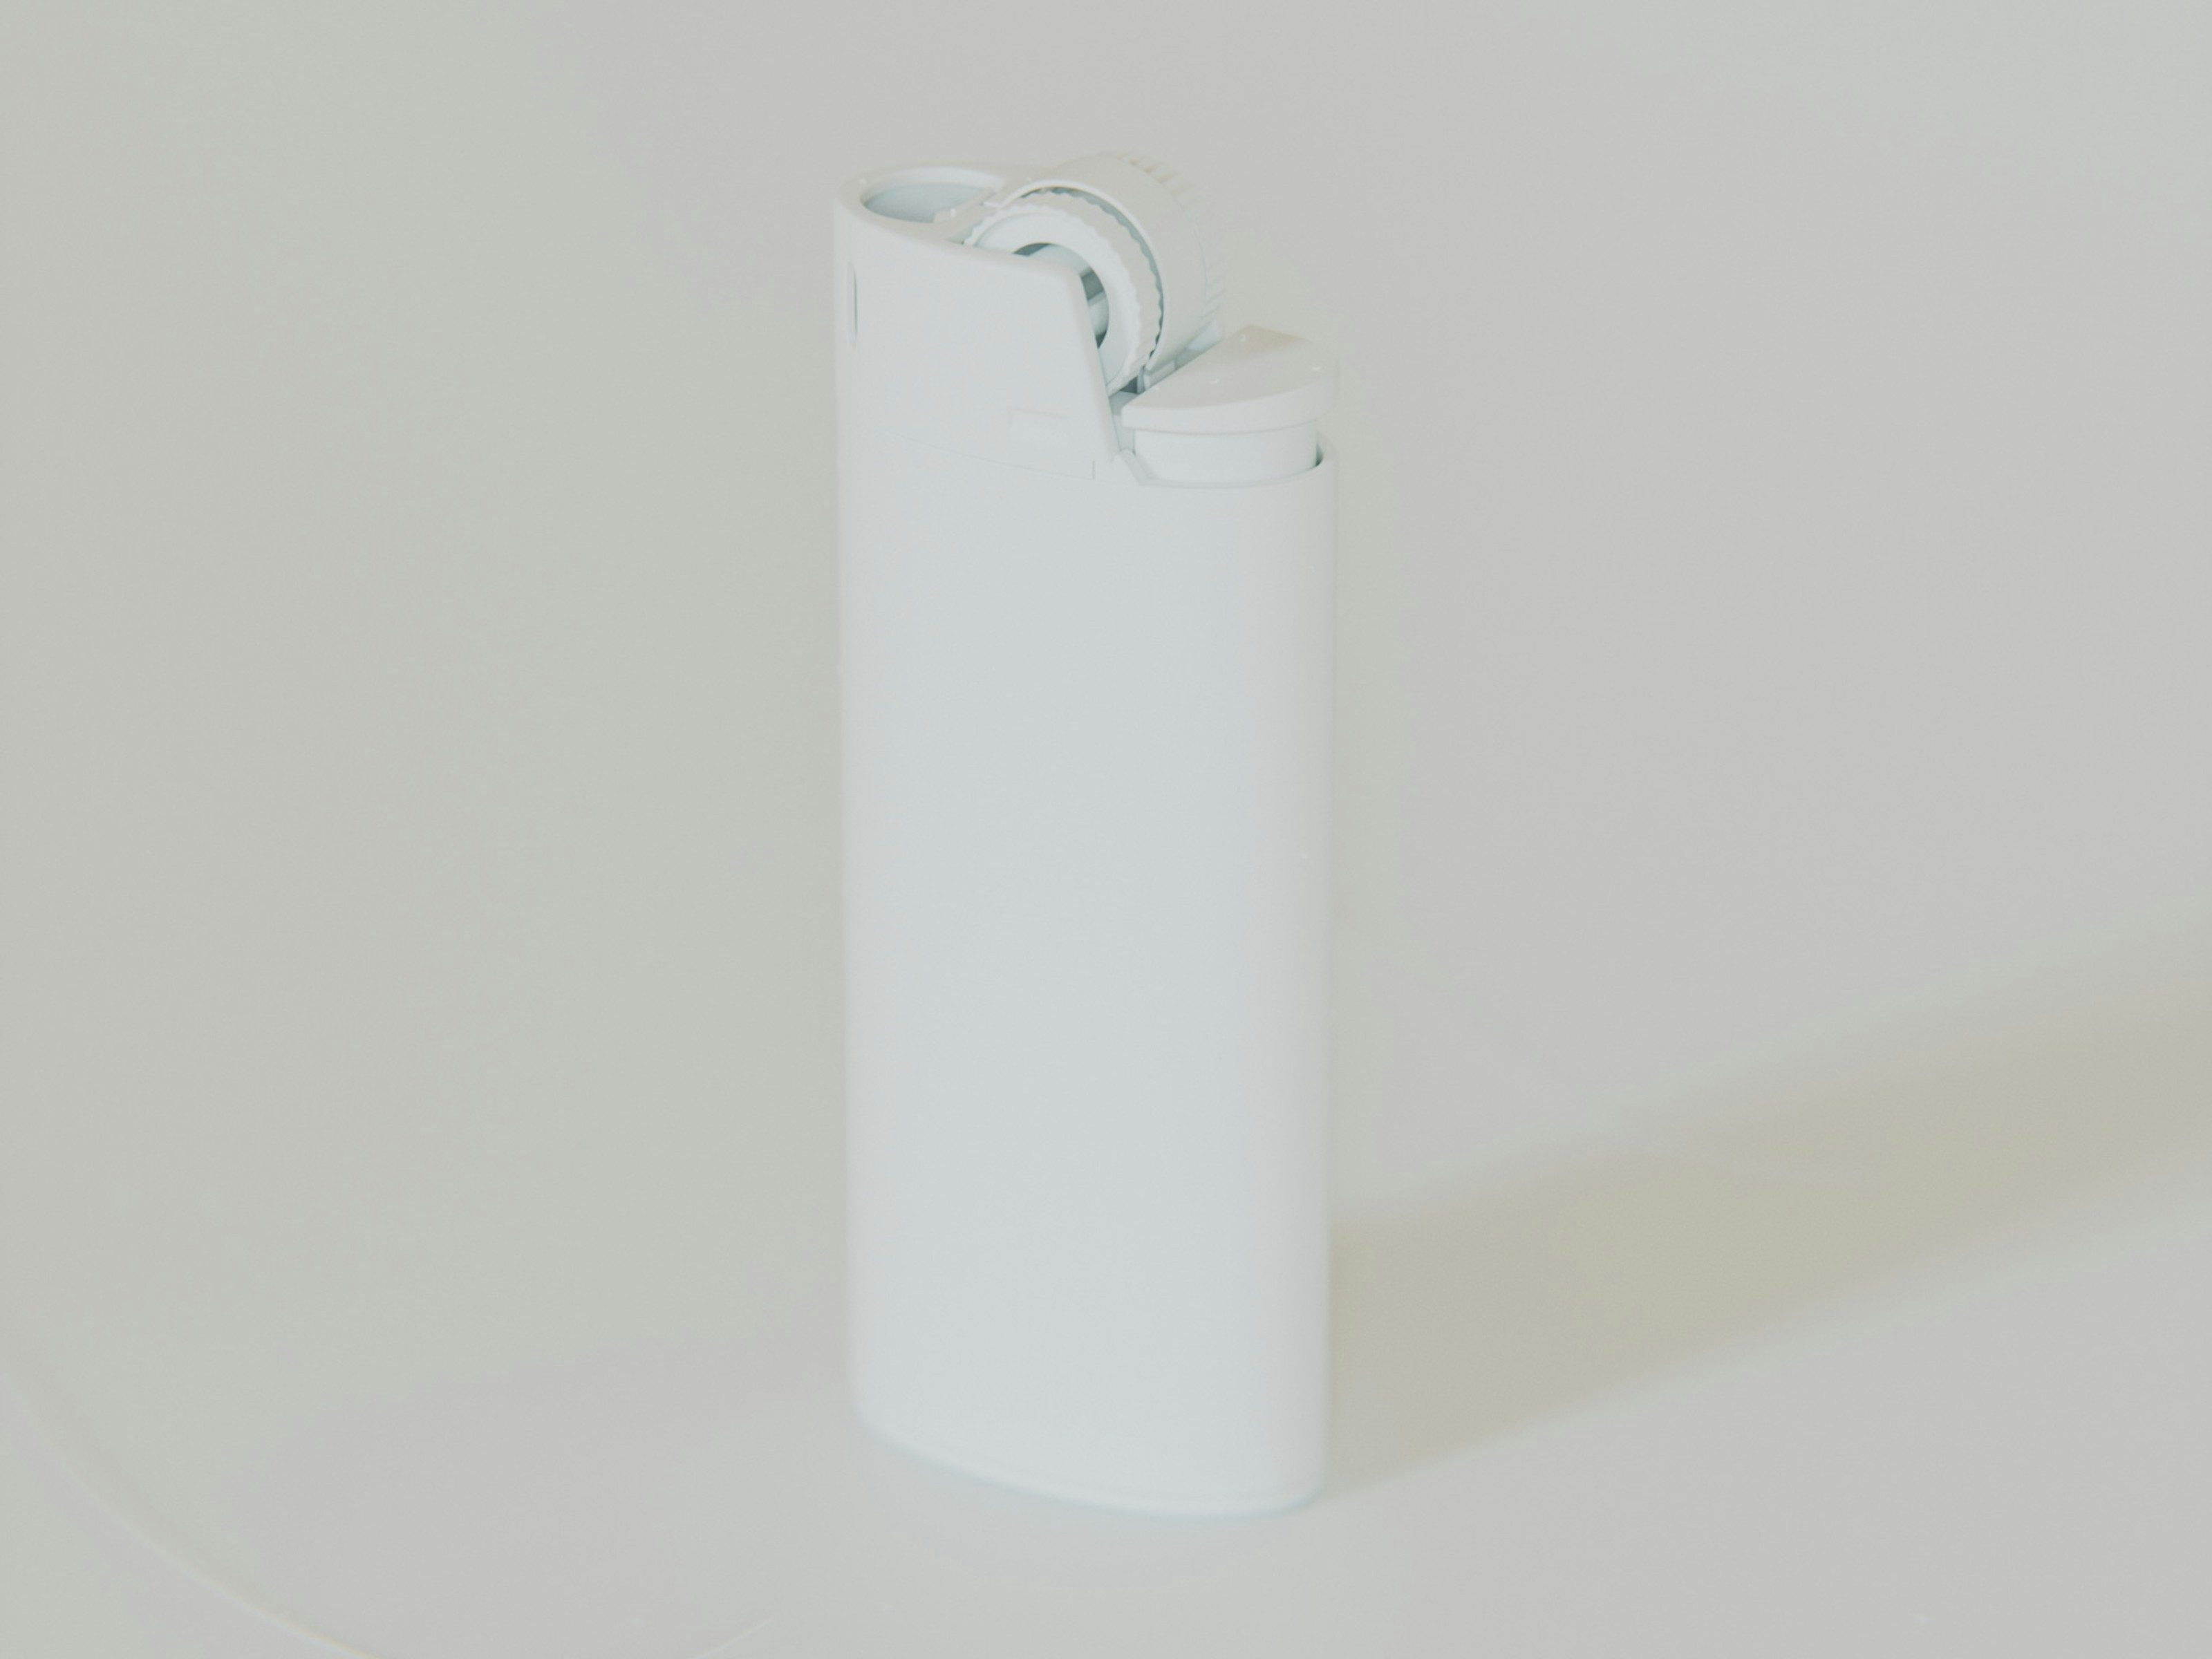 Clay render of BIC Mini Lighter